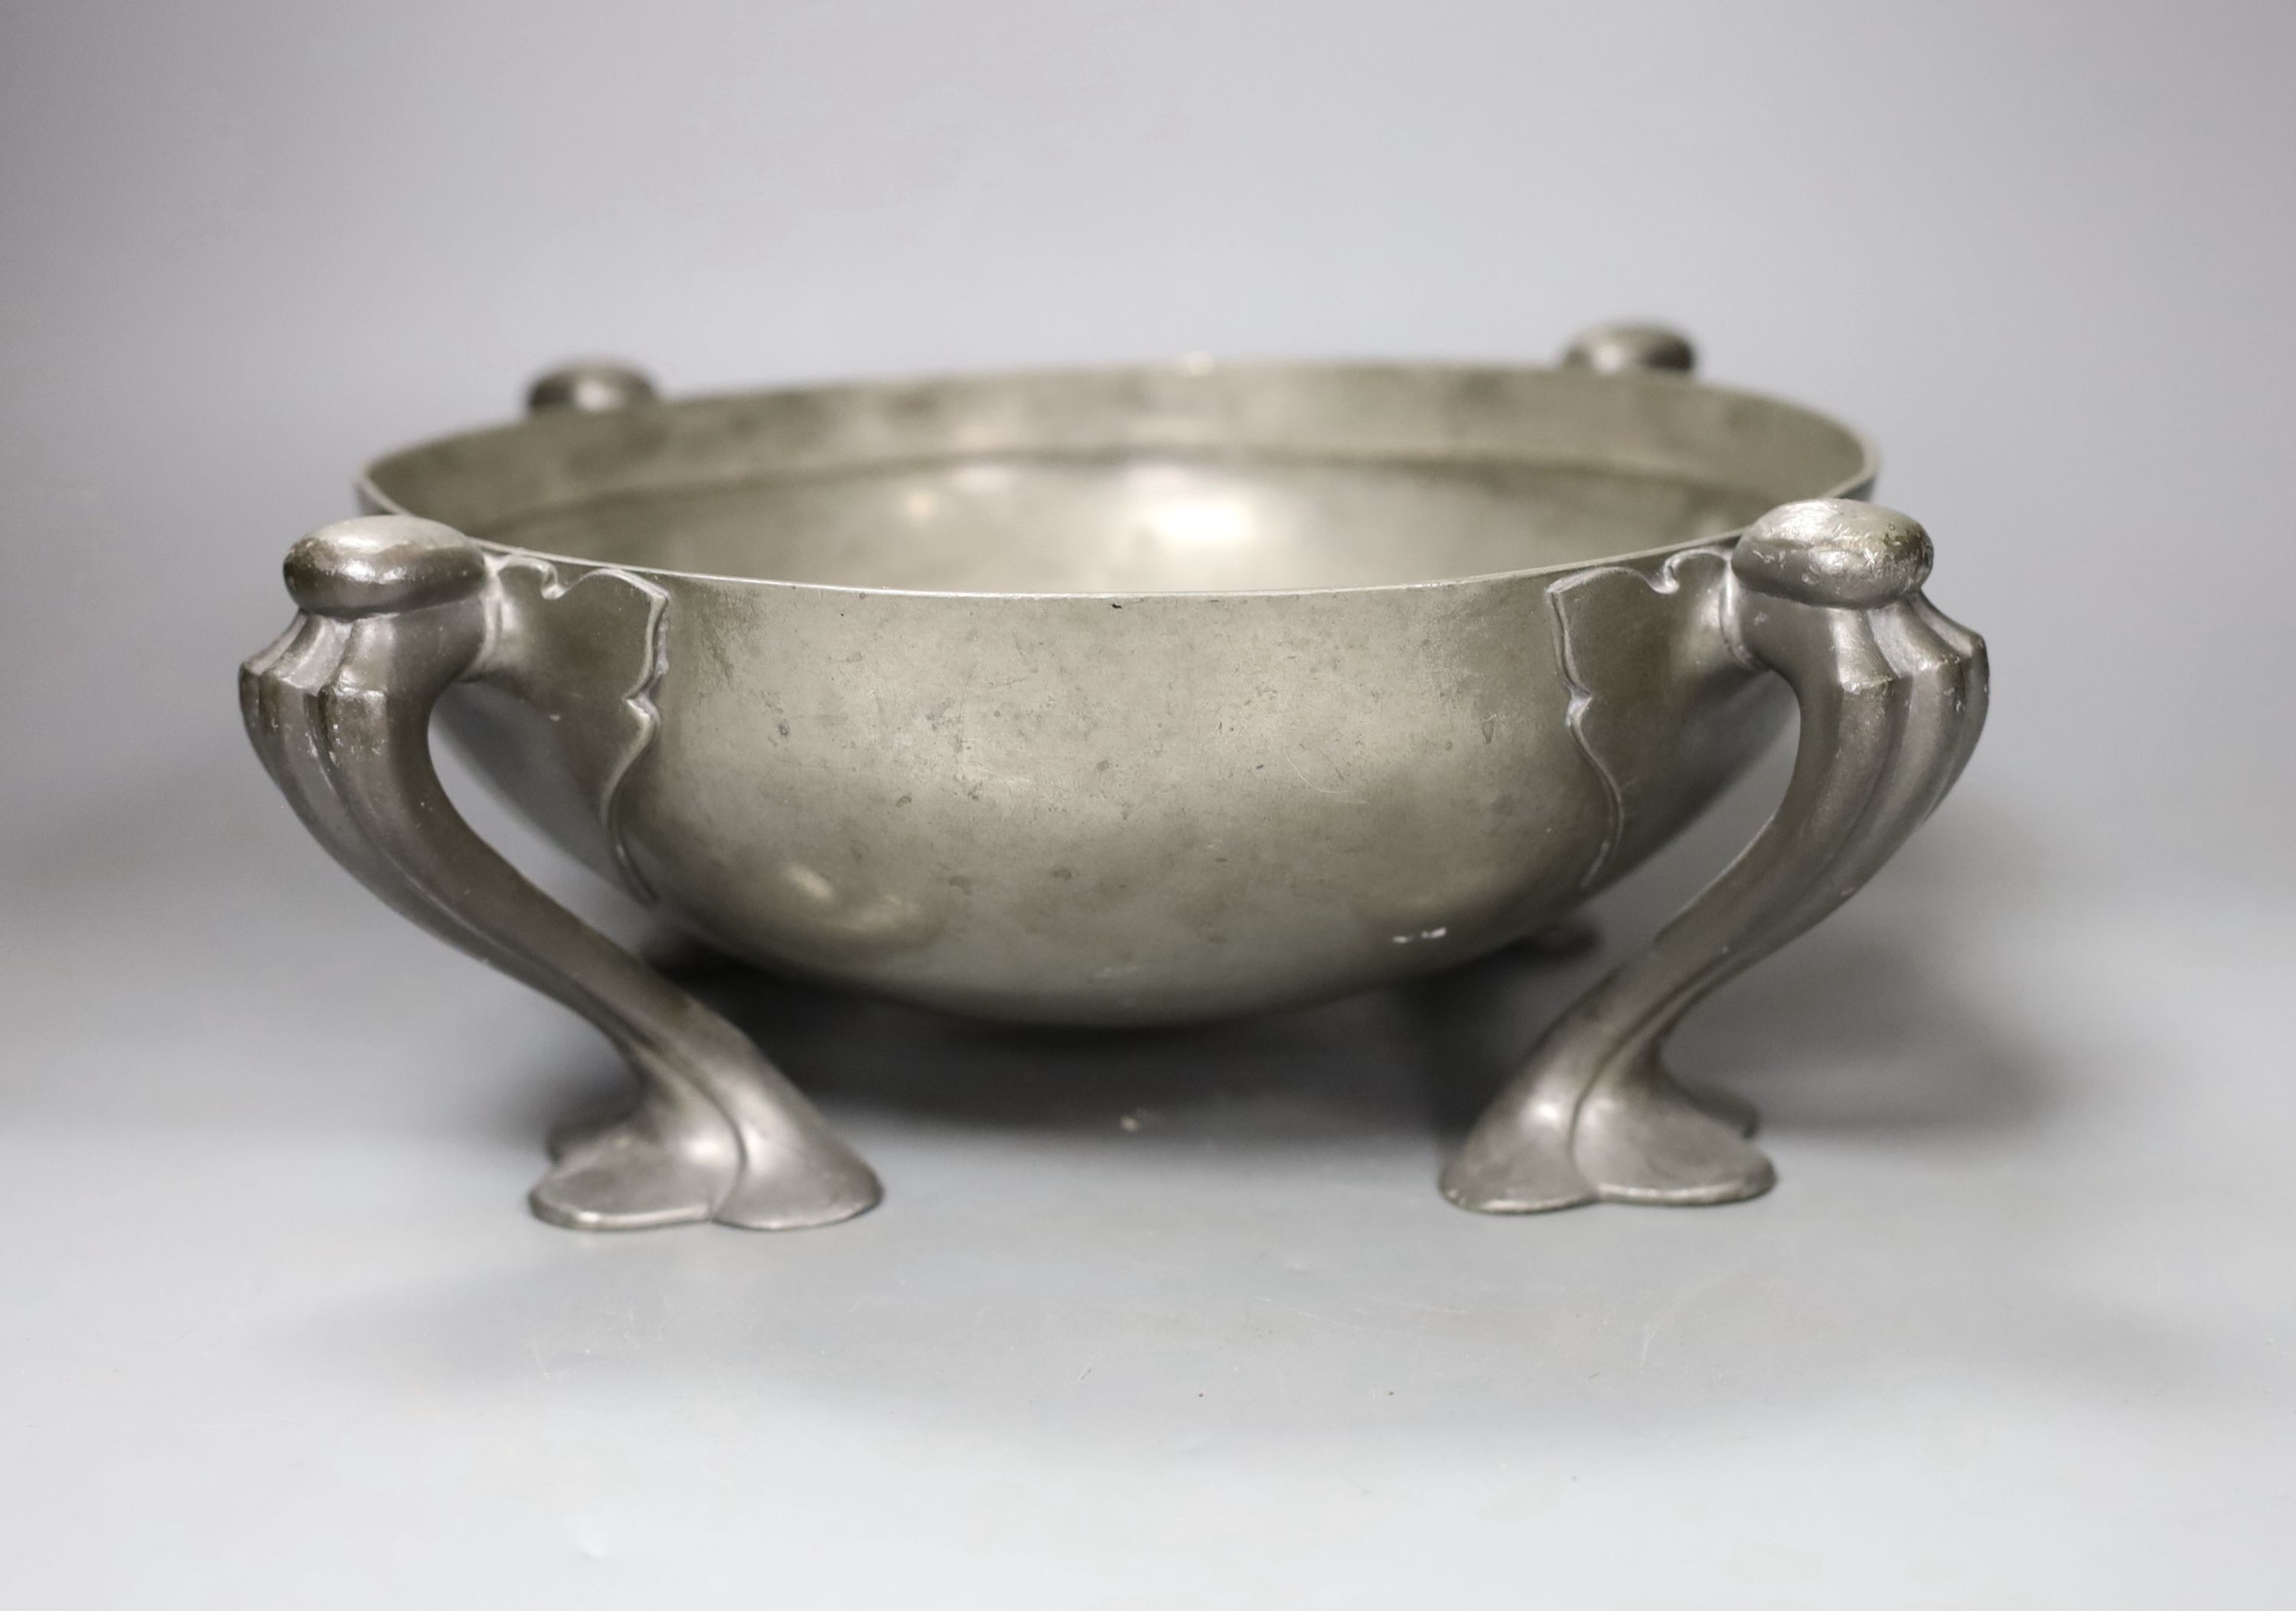 Oliver Baker for Liberty’s, a Tudric pewter fruit bowl, shape 067, on stylised feet, 26cm. diam.